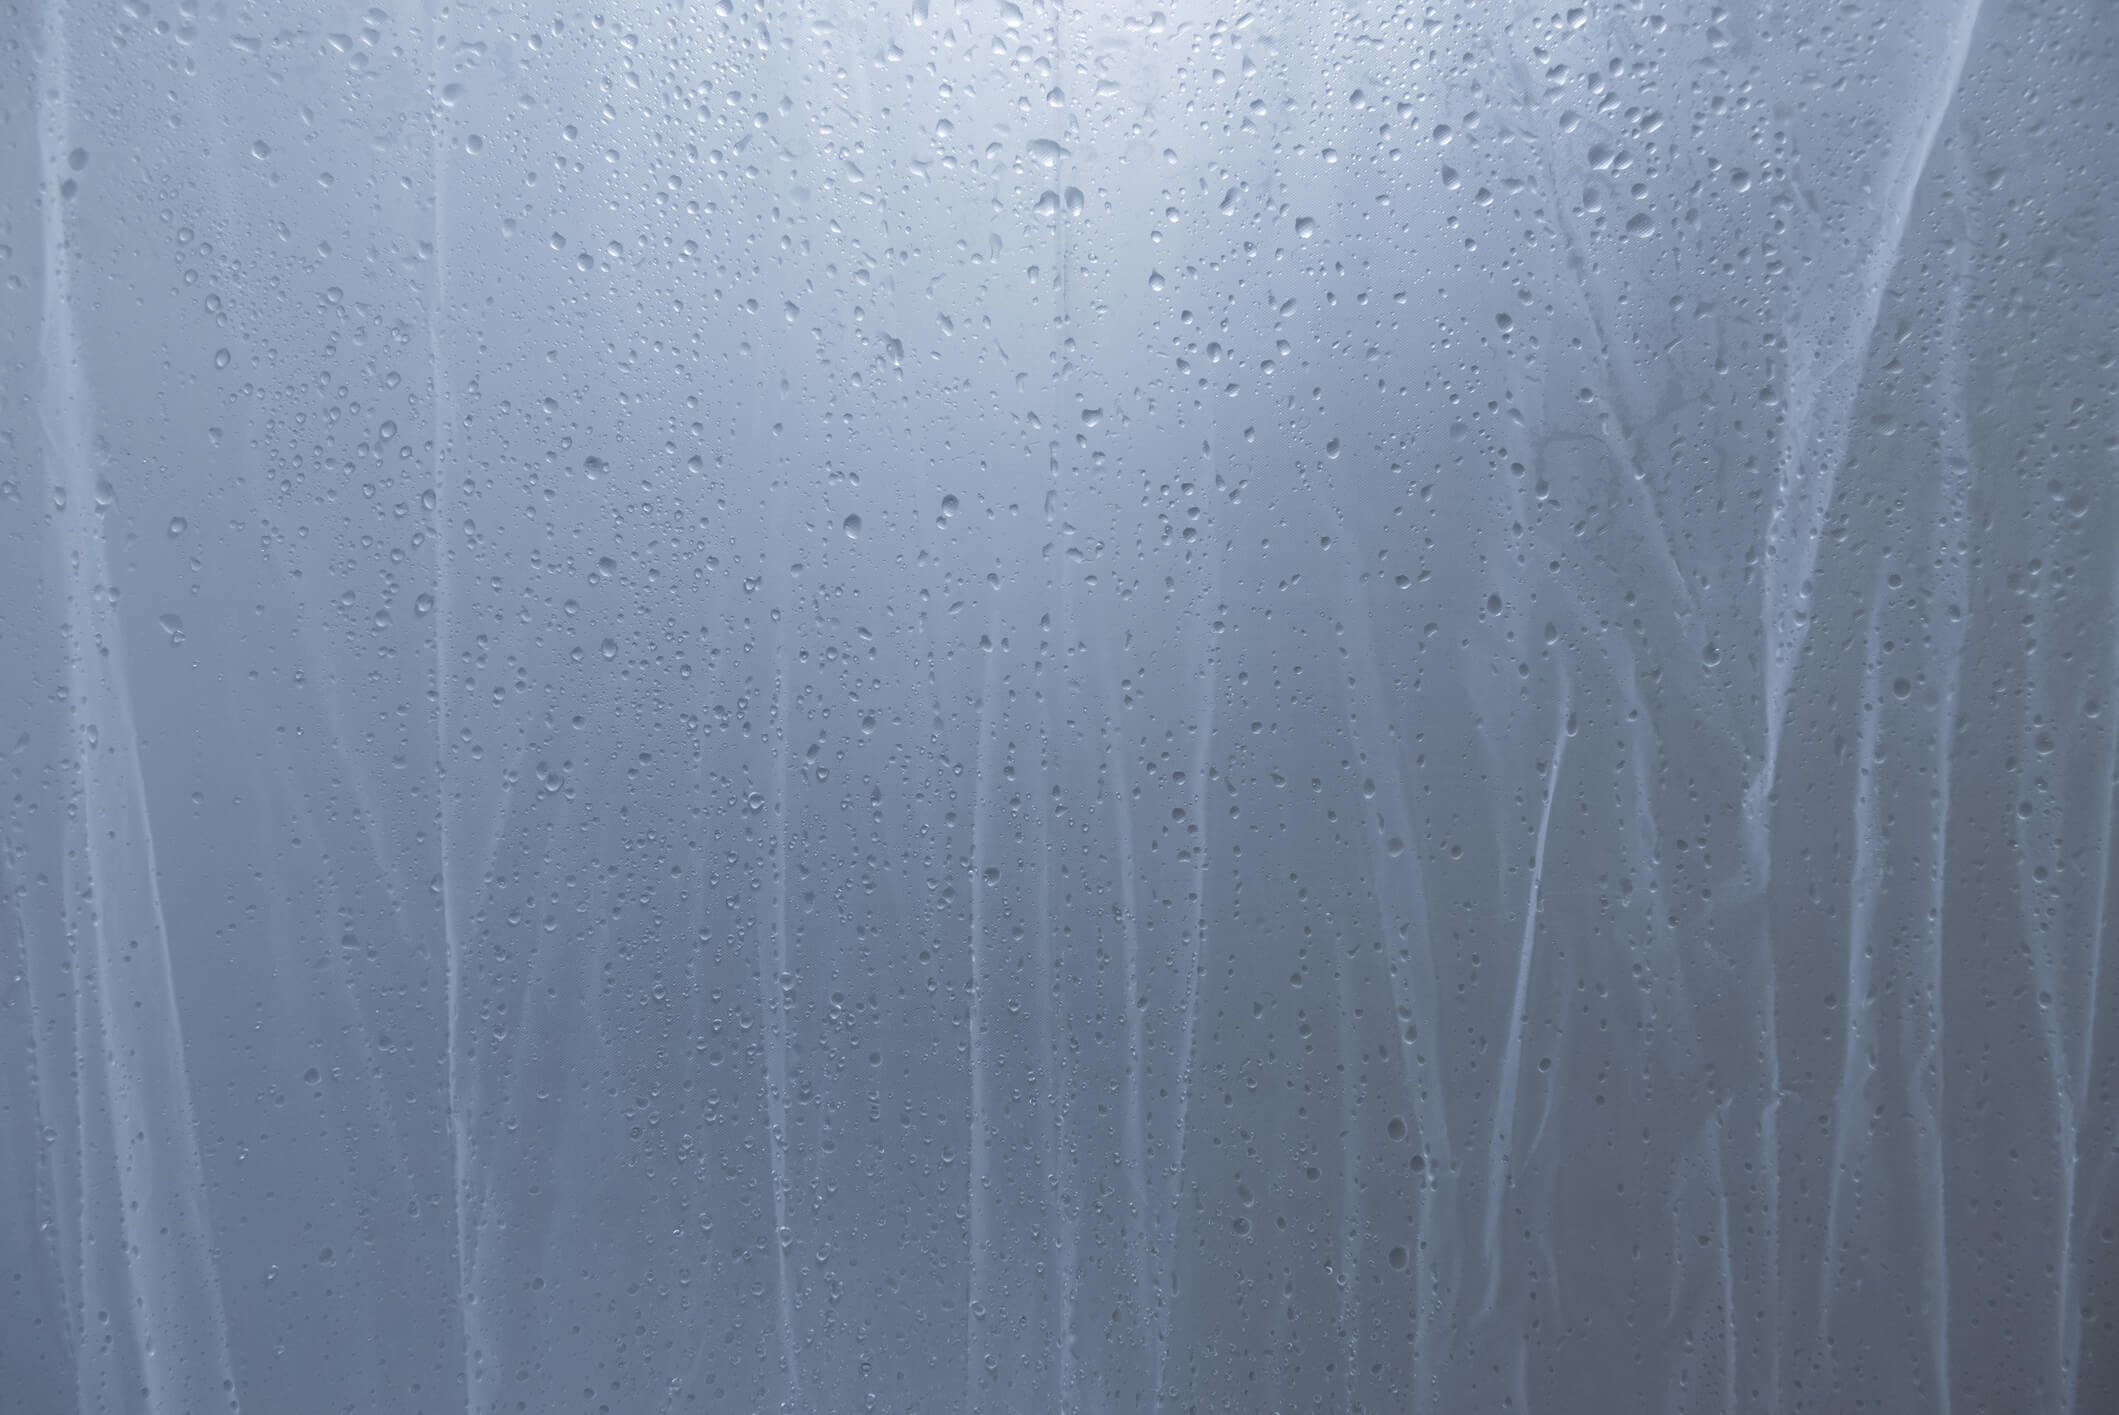 mold on a shower curtain